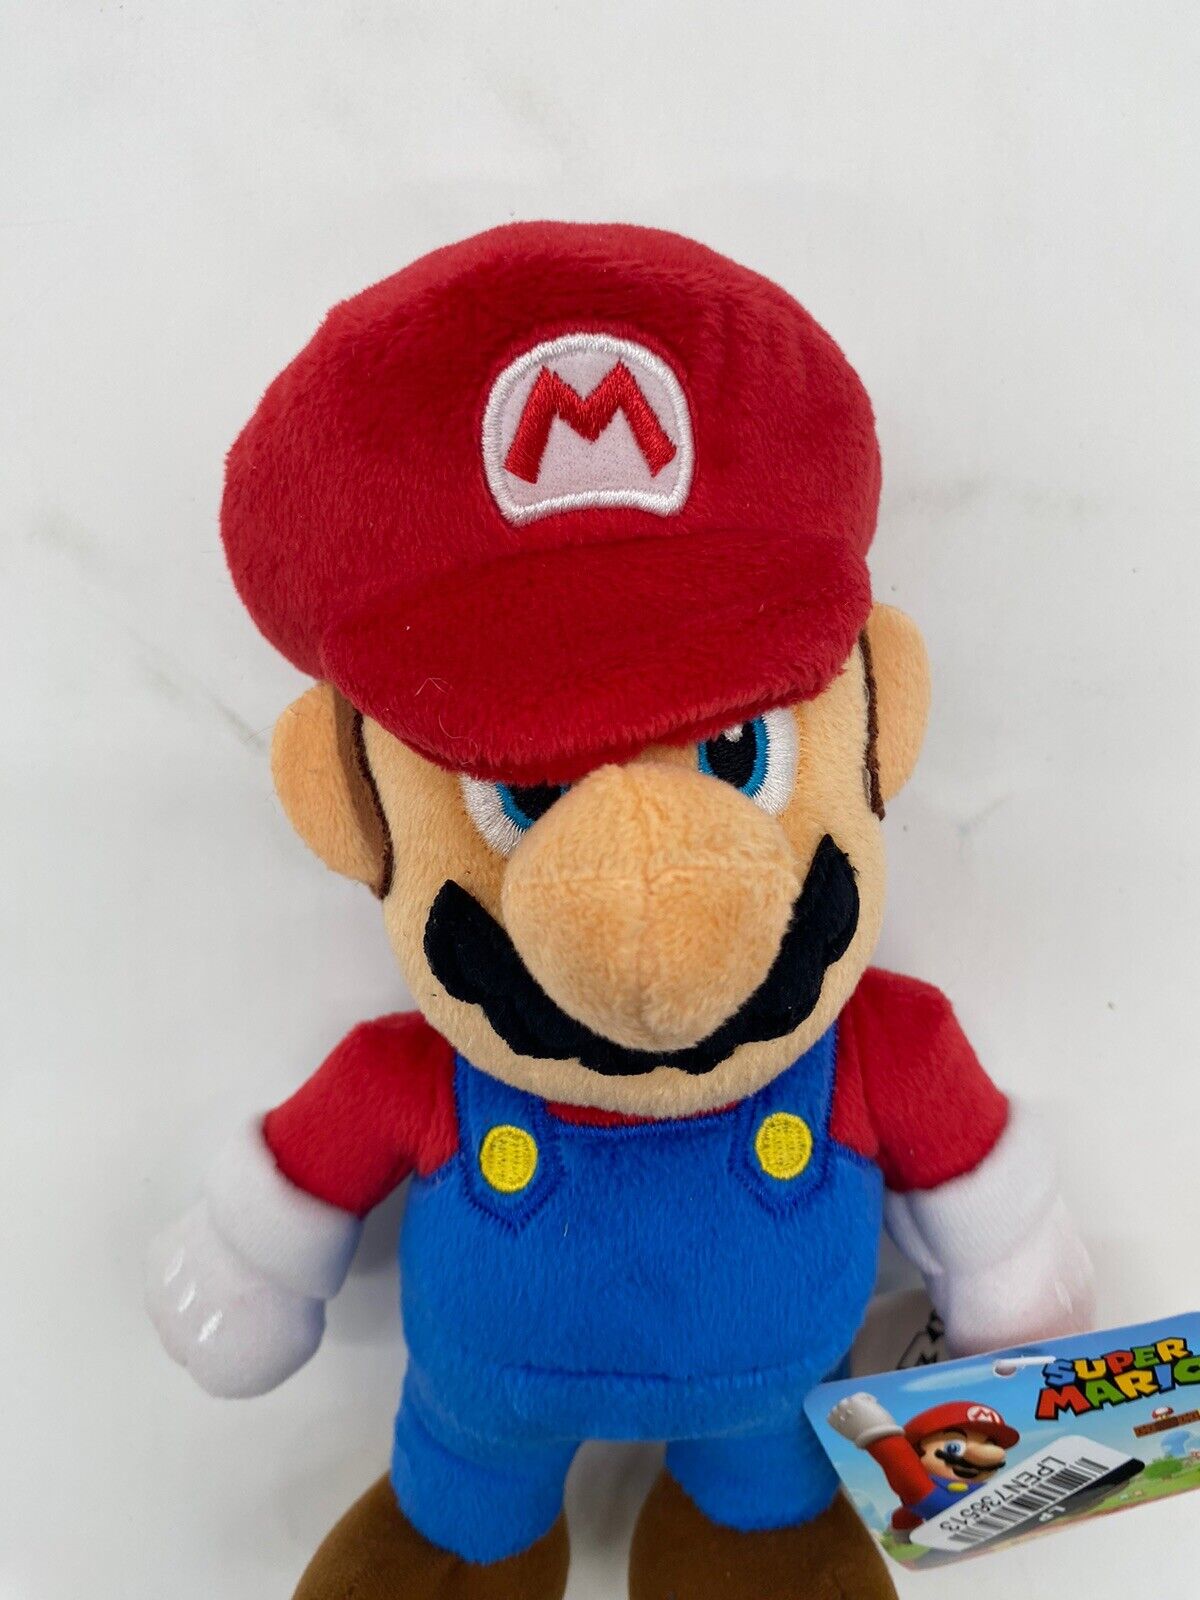 Super Mario Plush World of Nintendo 8" Stuffed Collectible Mario BRAND NEW JAKKS Pacific 40437 - фотография #2